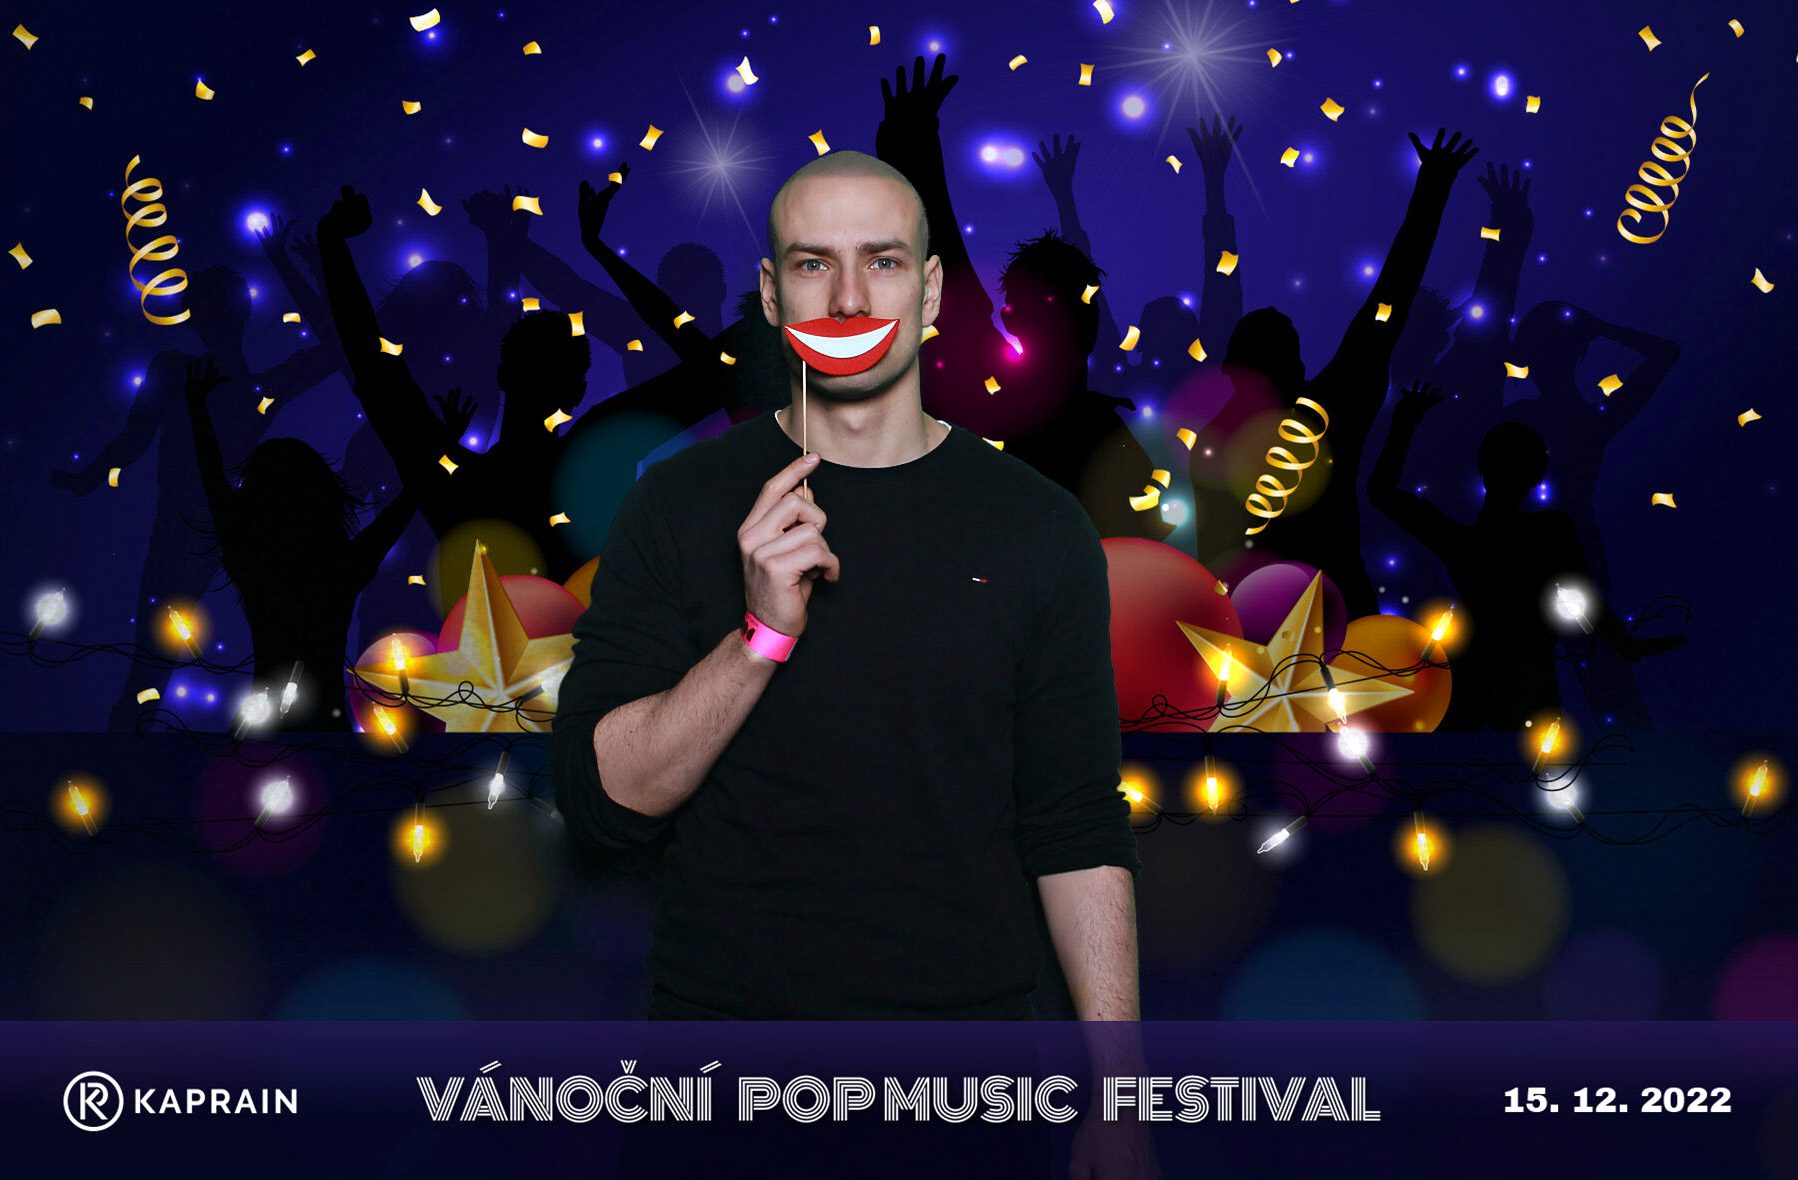 fotokoutek-firemni-vecirek-vanocni-vecirek-kaprain-vanocni-popmusic-festival-15-12-2022-820217